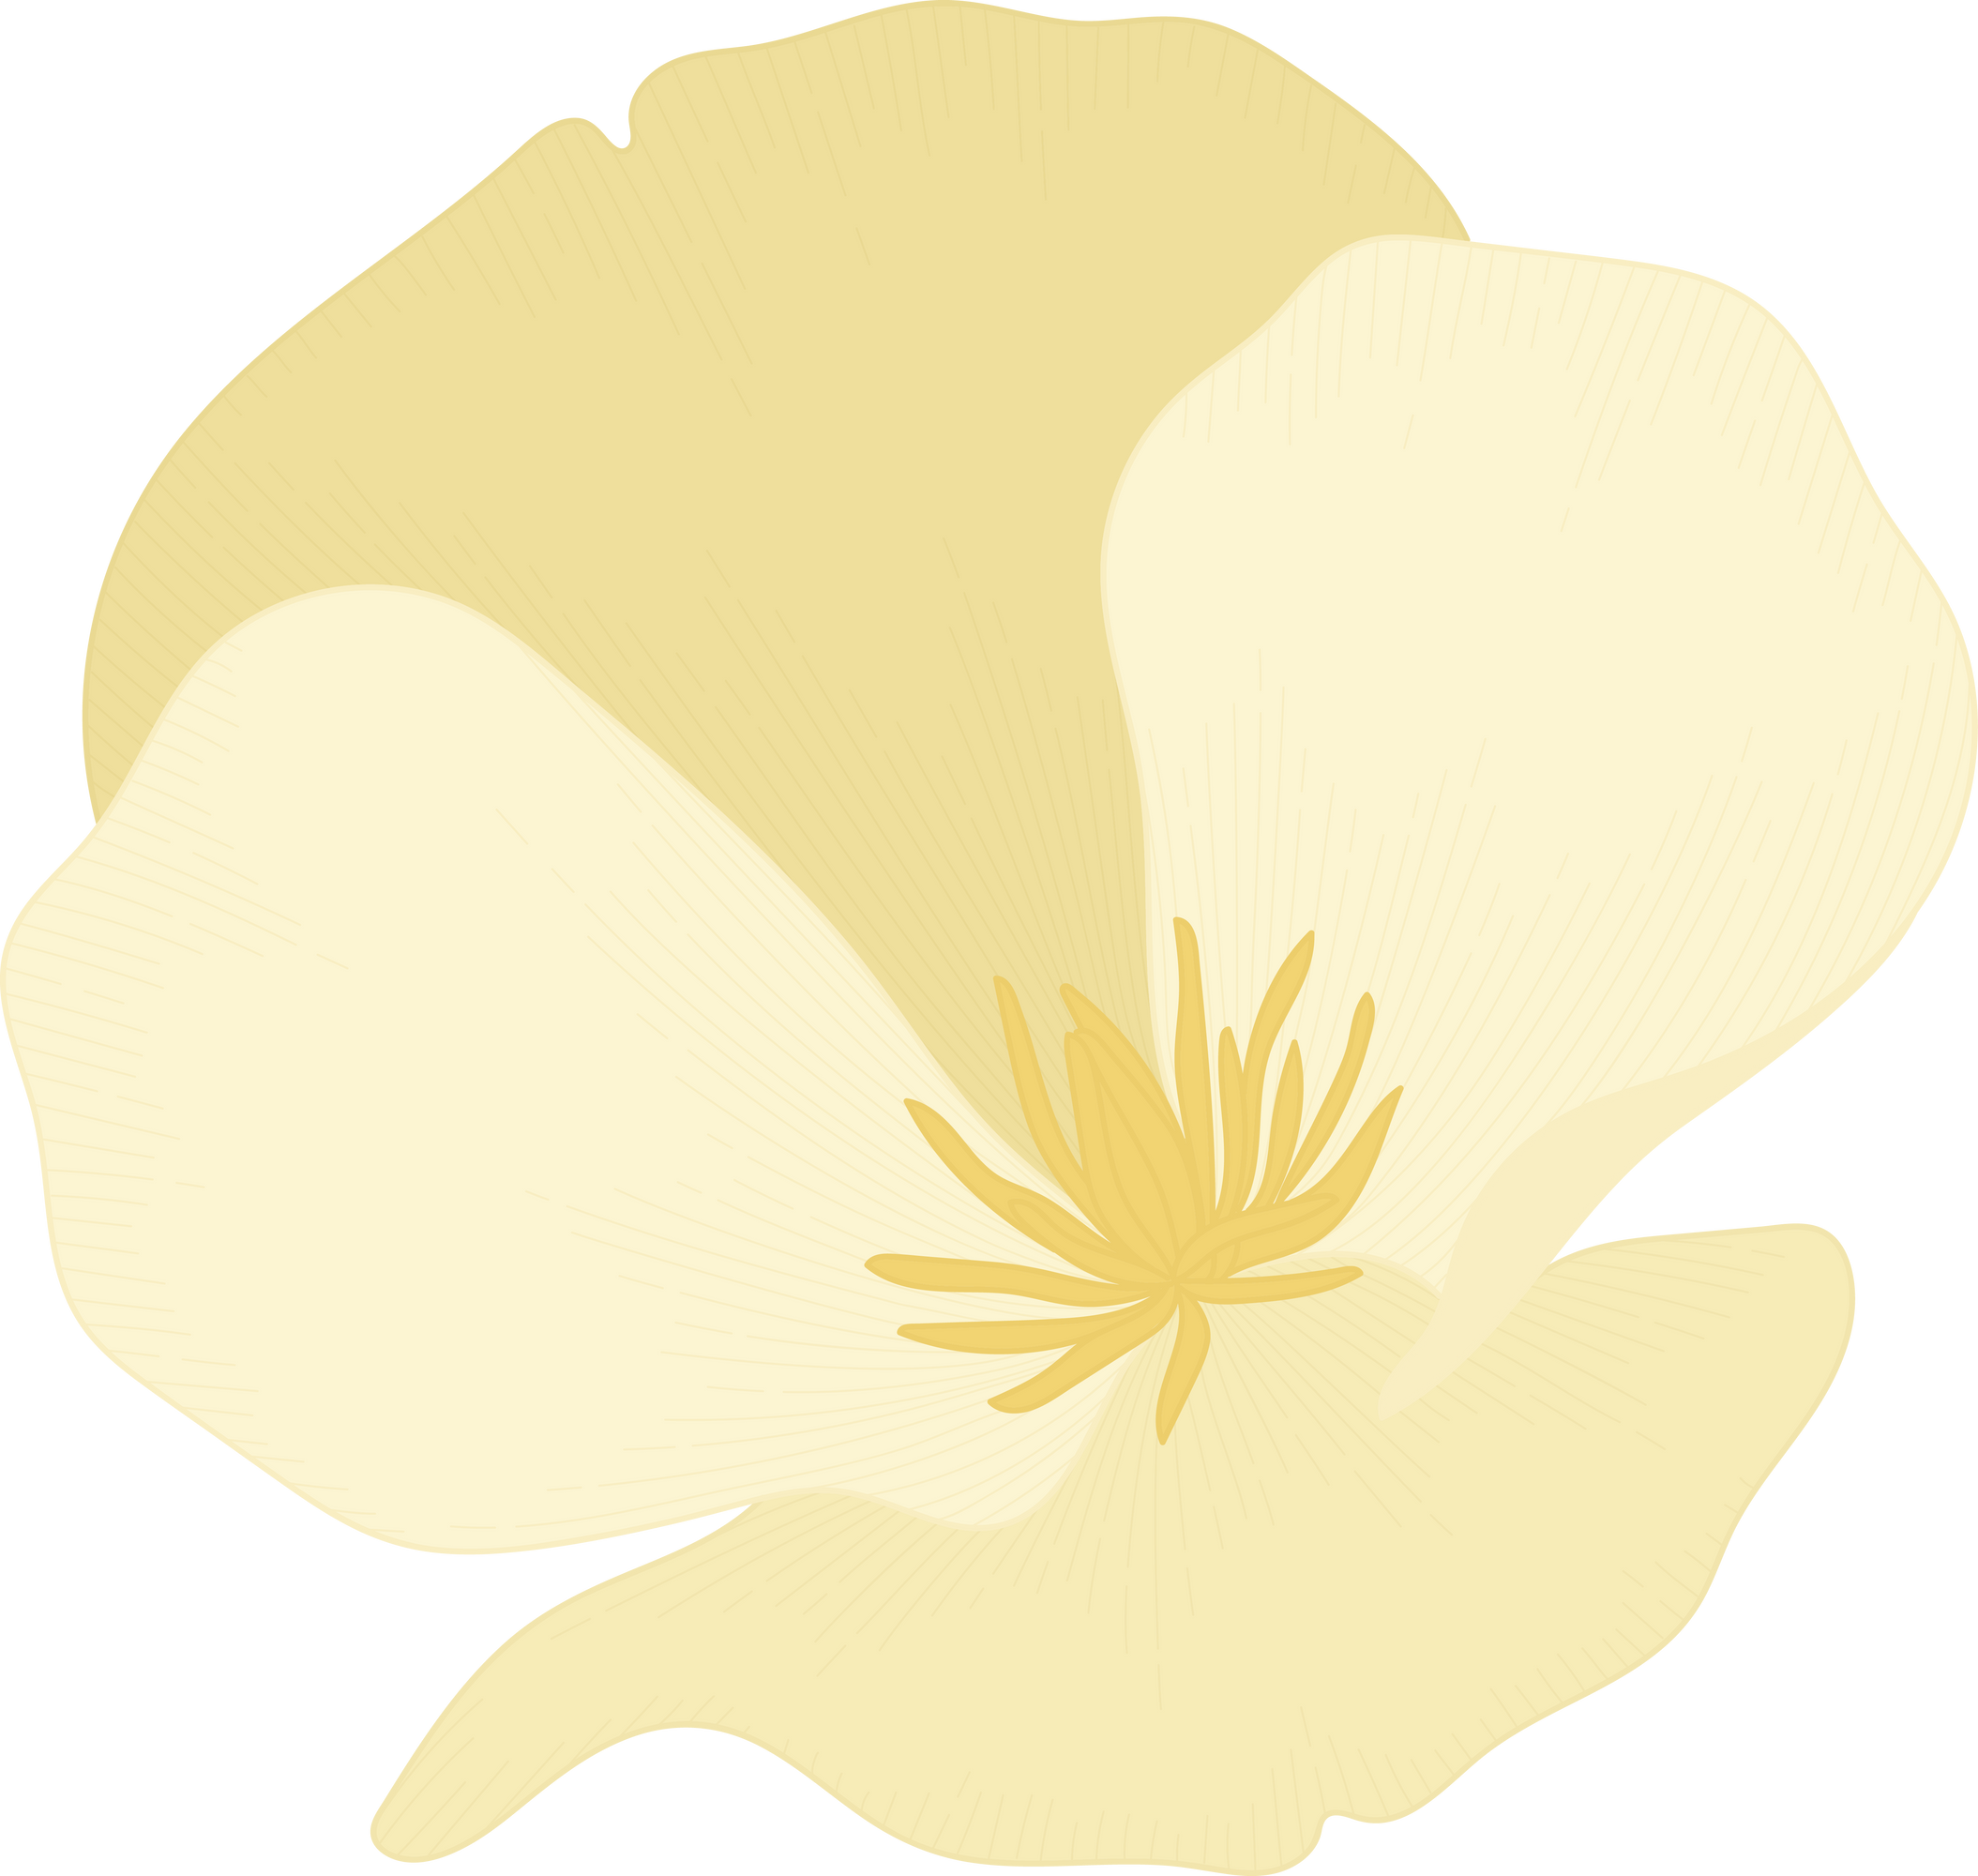 White california poppy flower hand drawn illustration.